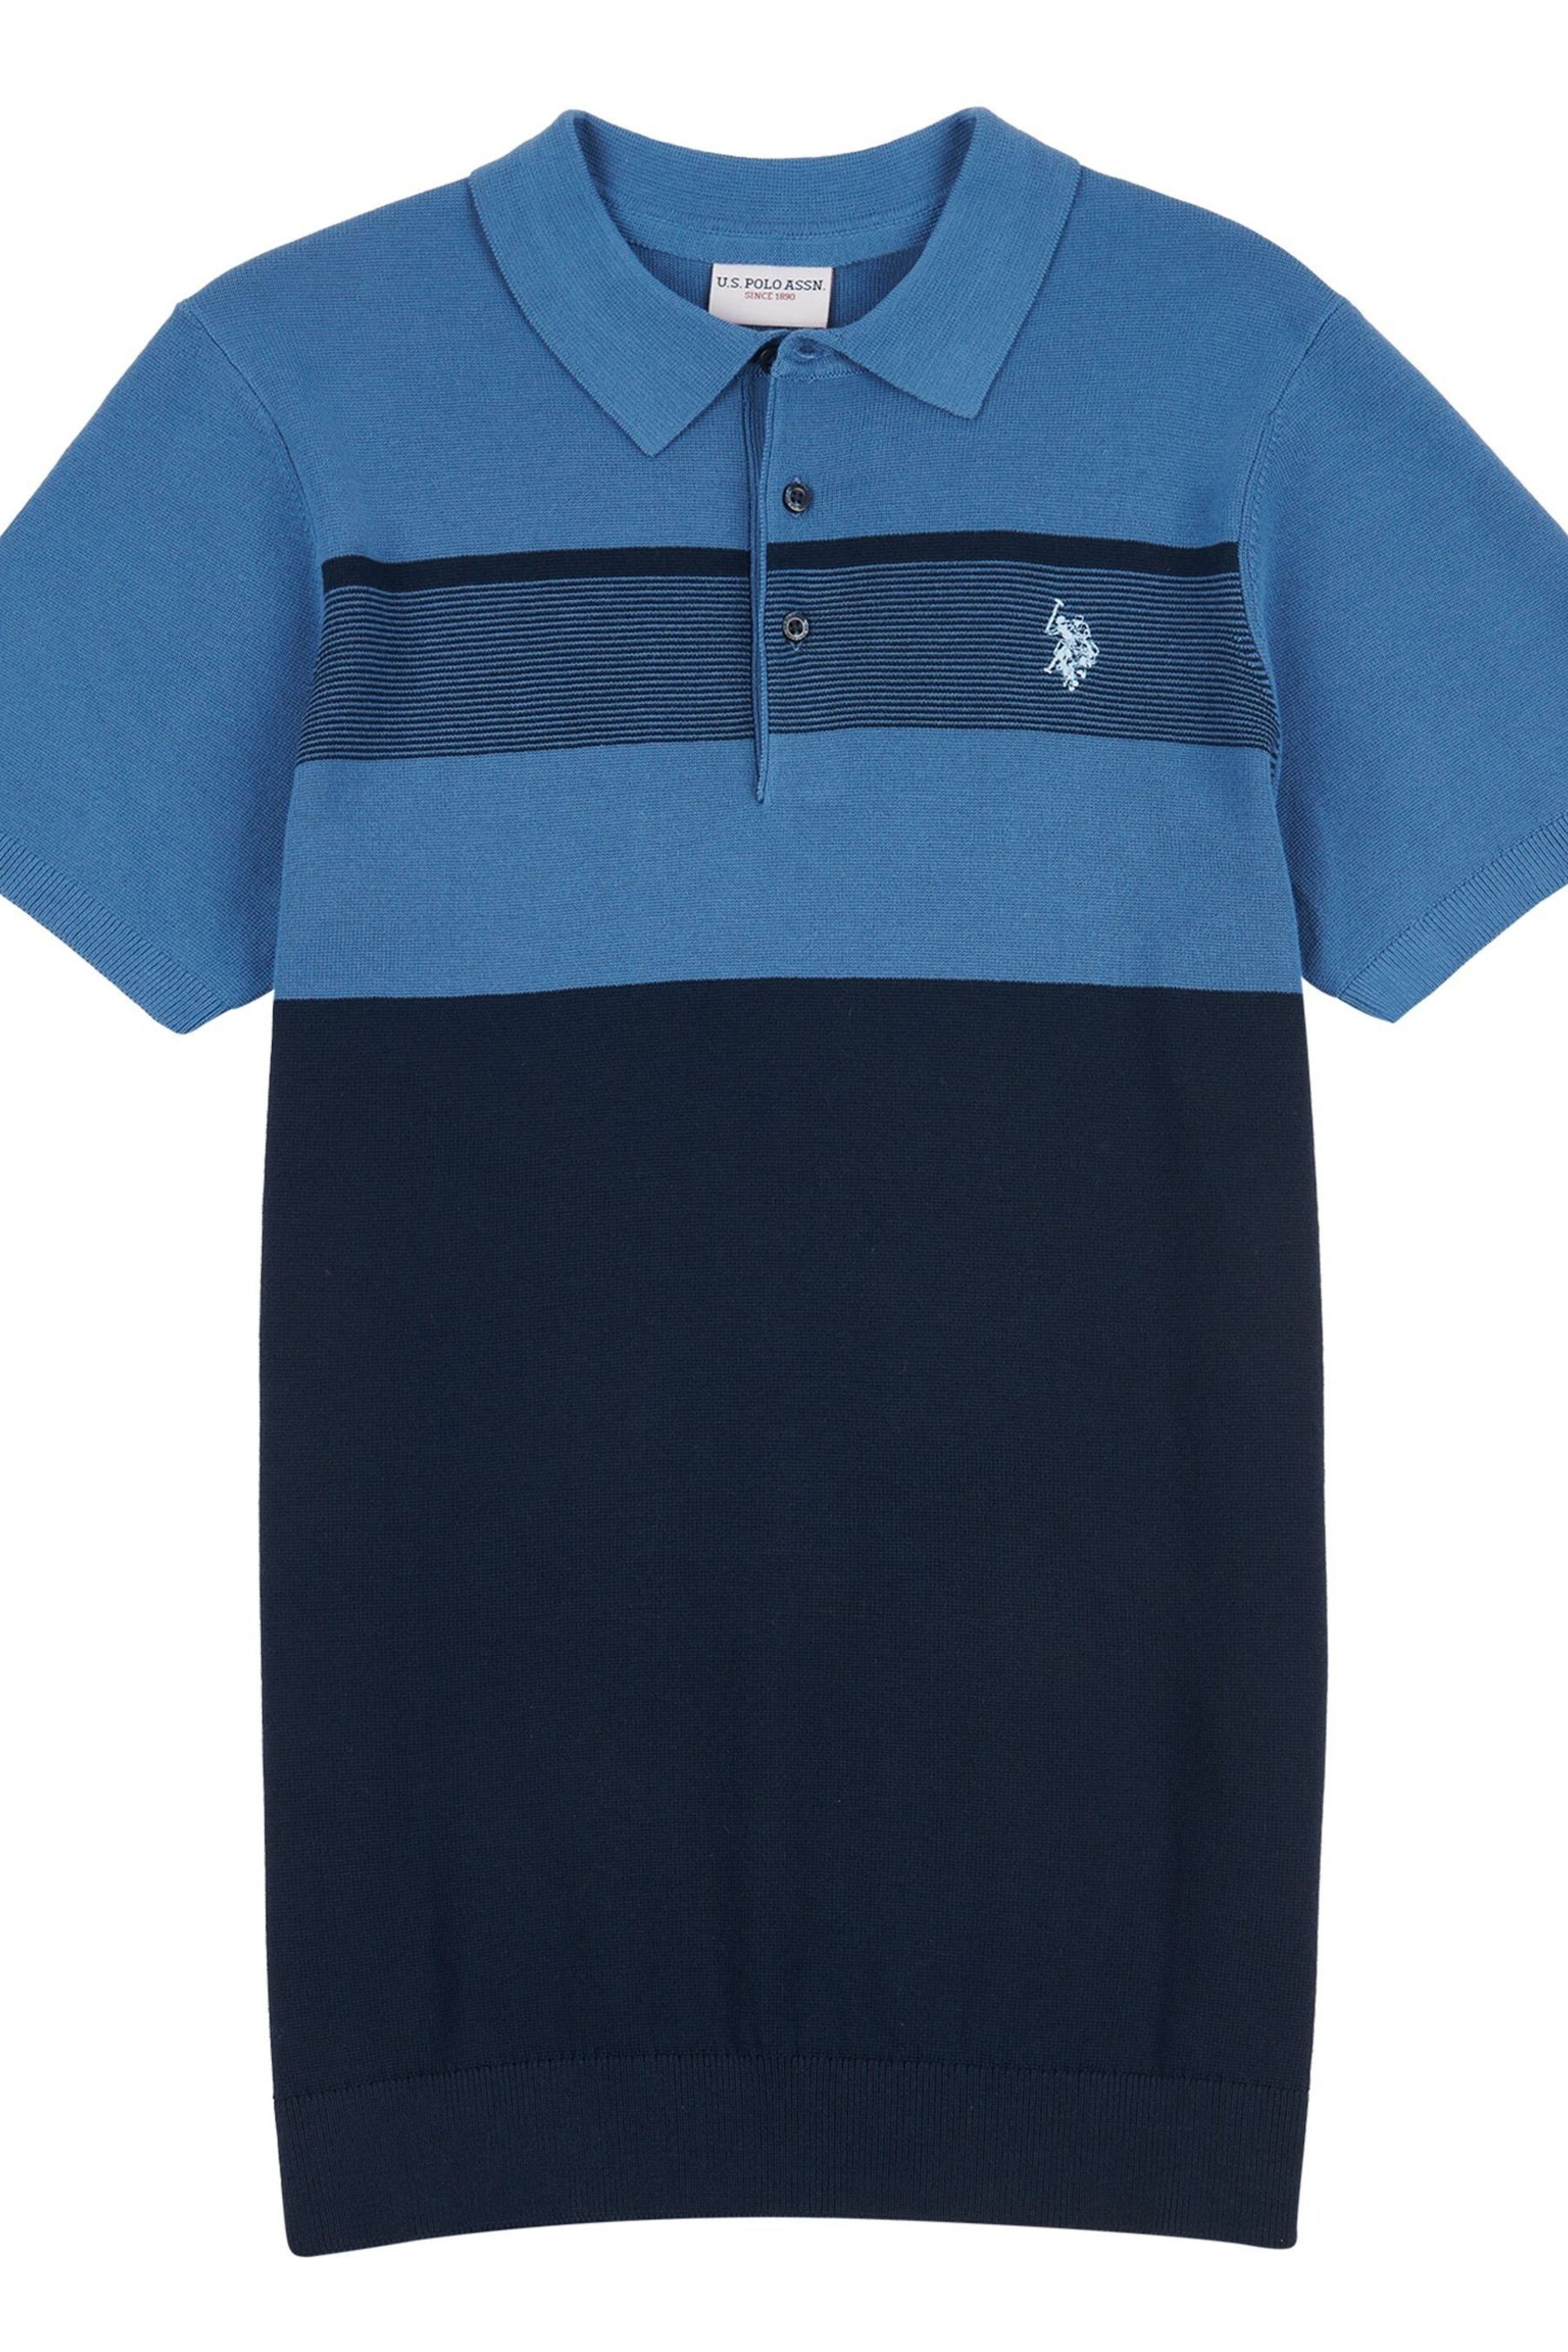 U.S. Polo Assn. Mens Regular Fit Blue Stripe Knit Polo Shirt - Image 5 of 7